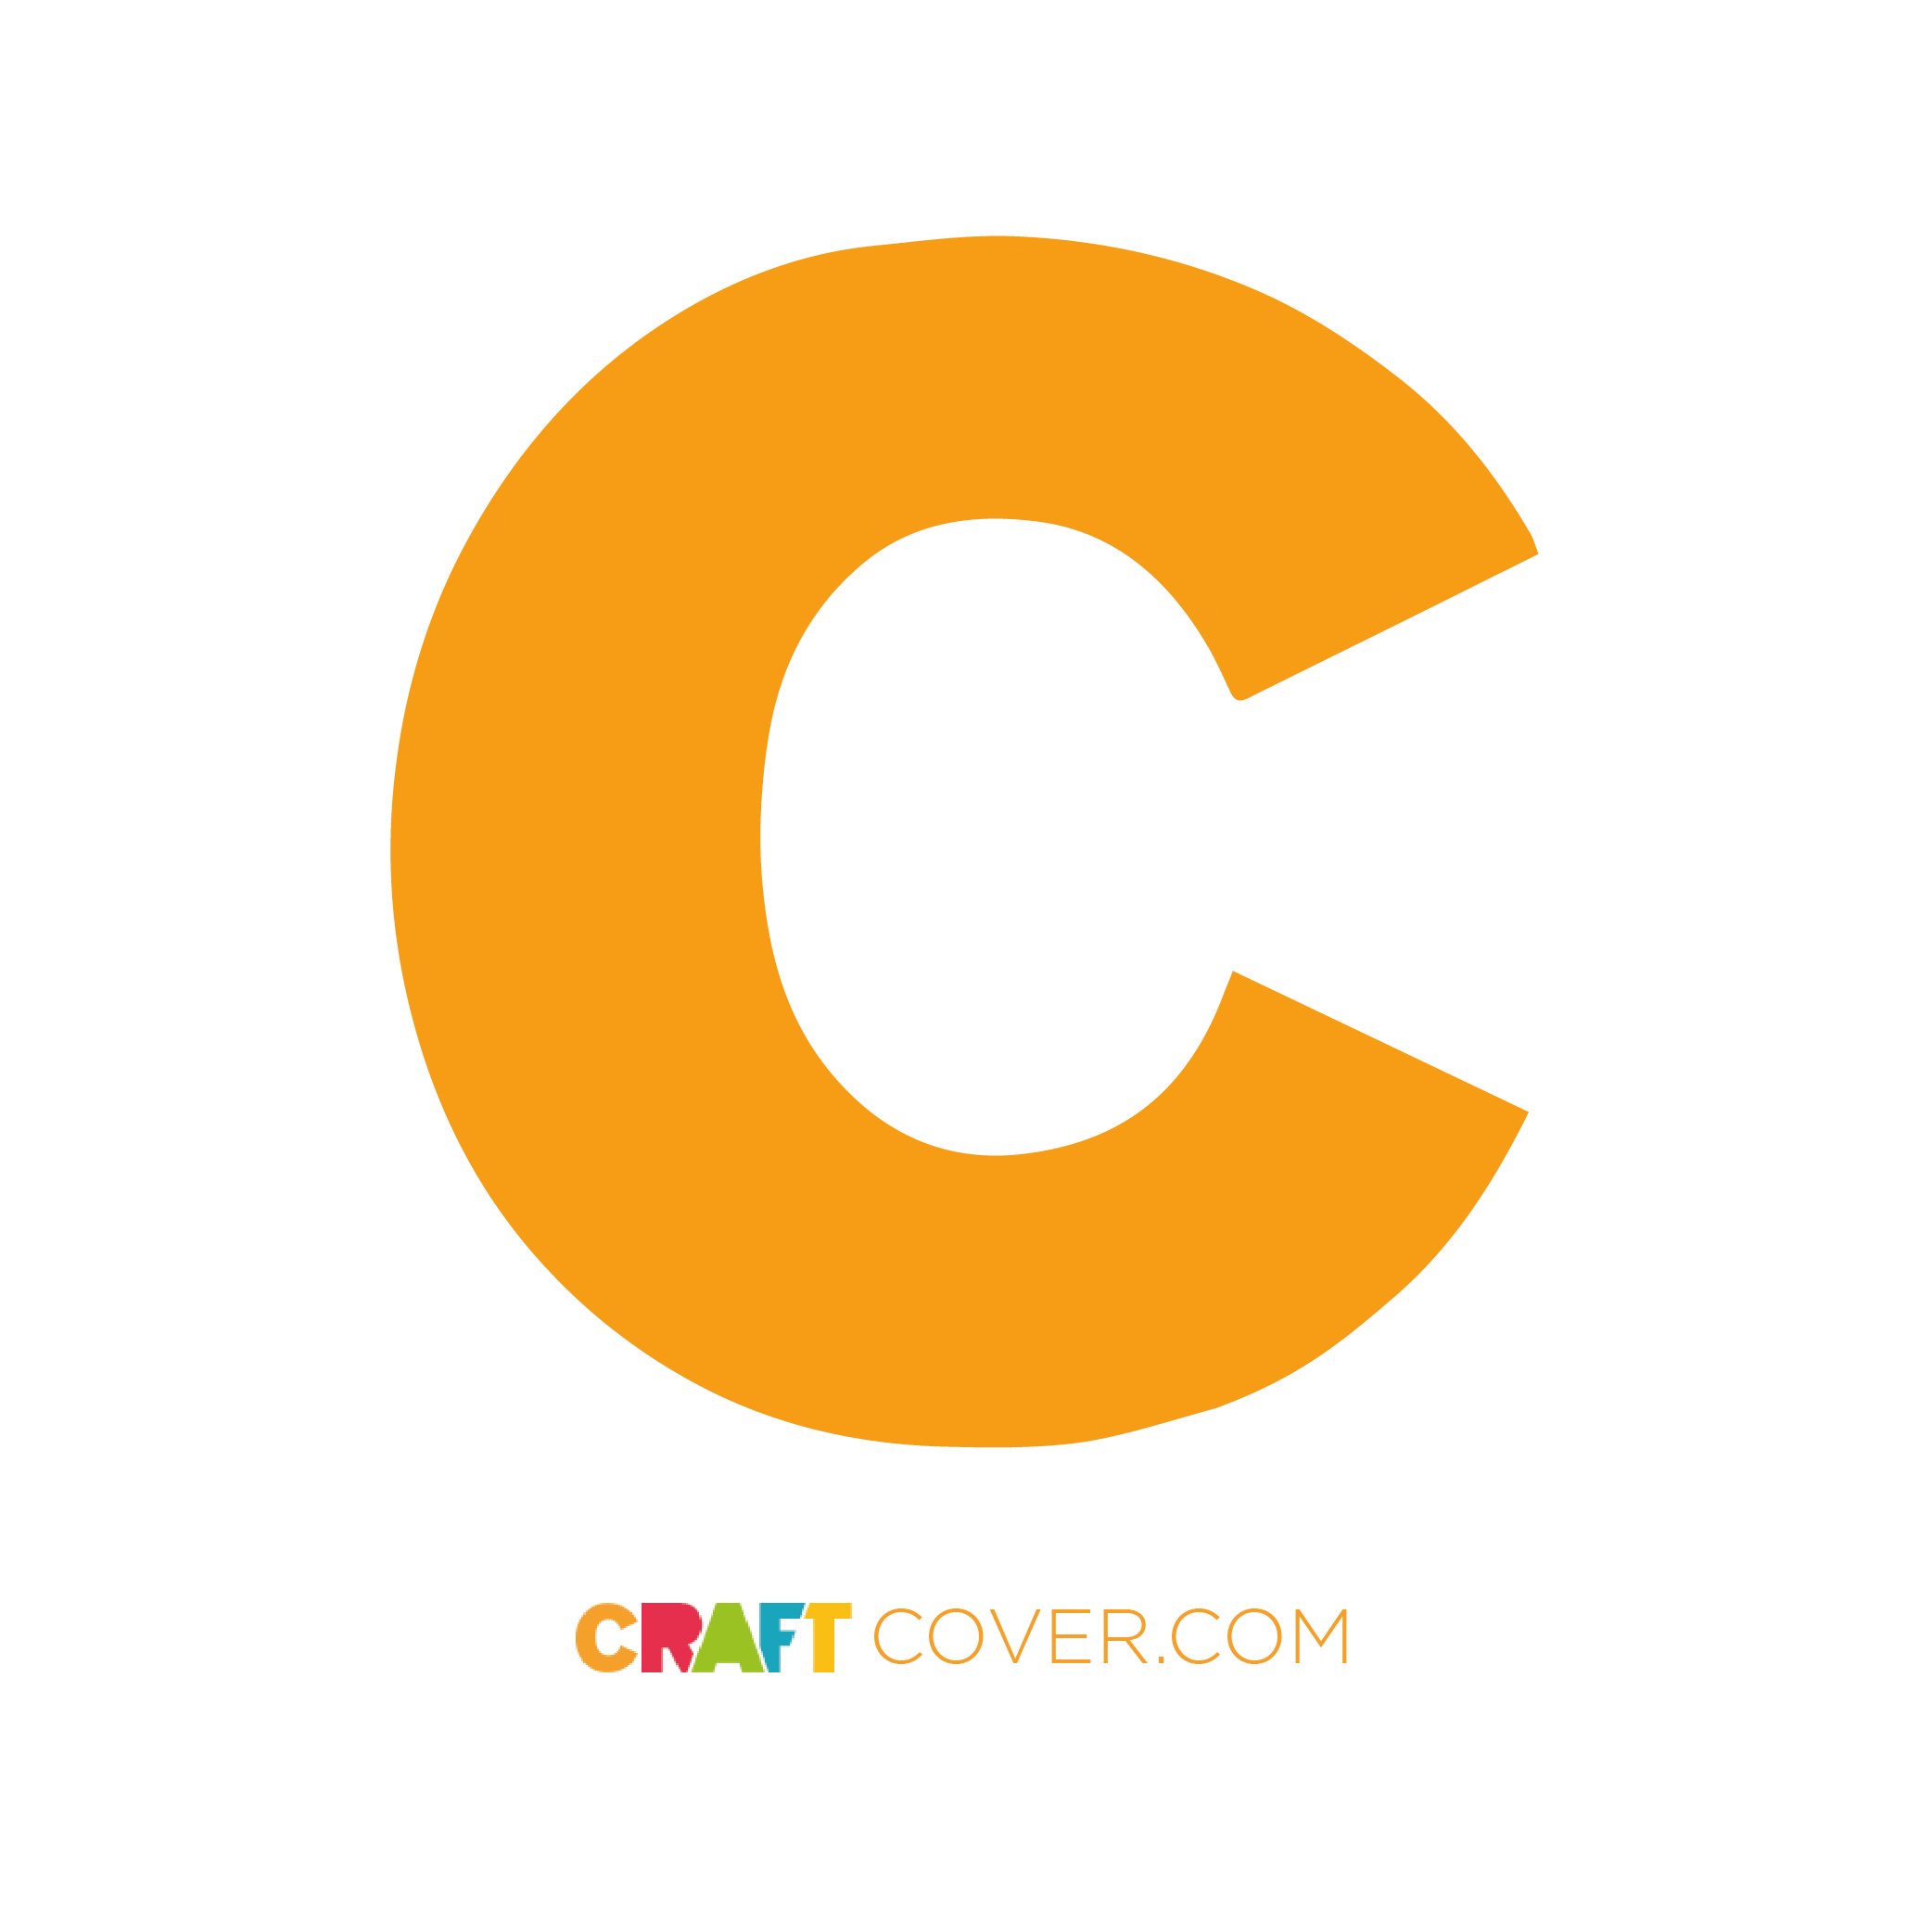 Craft cover square logo. Orange 'C' on white background.